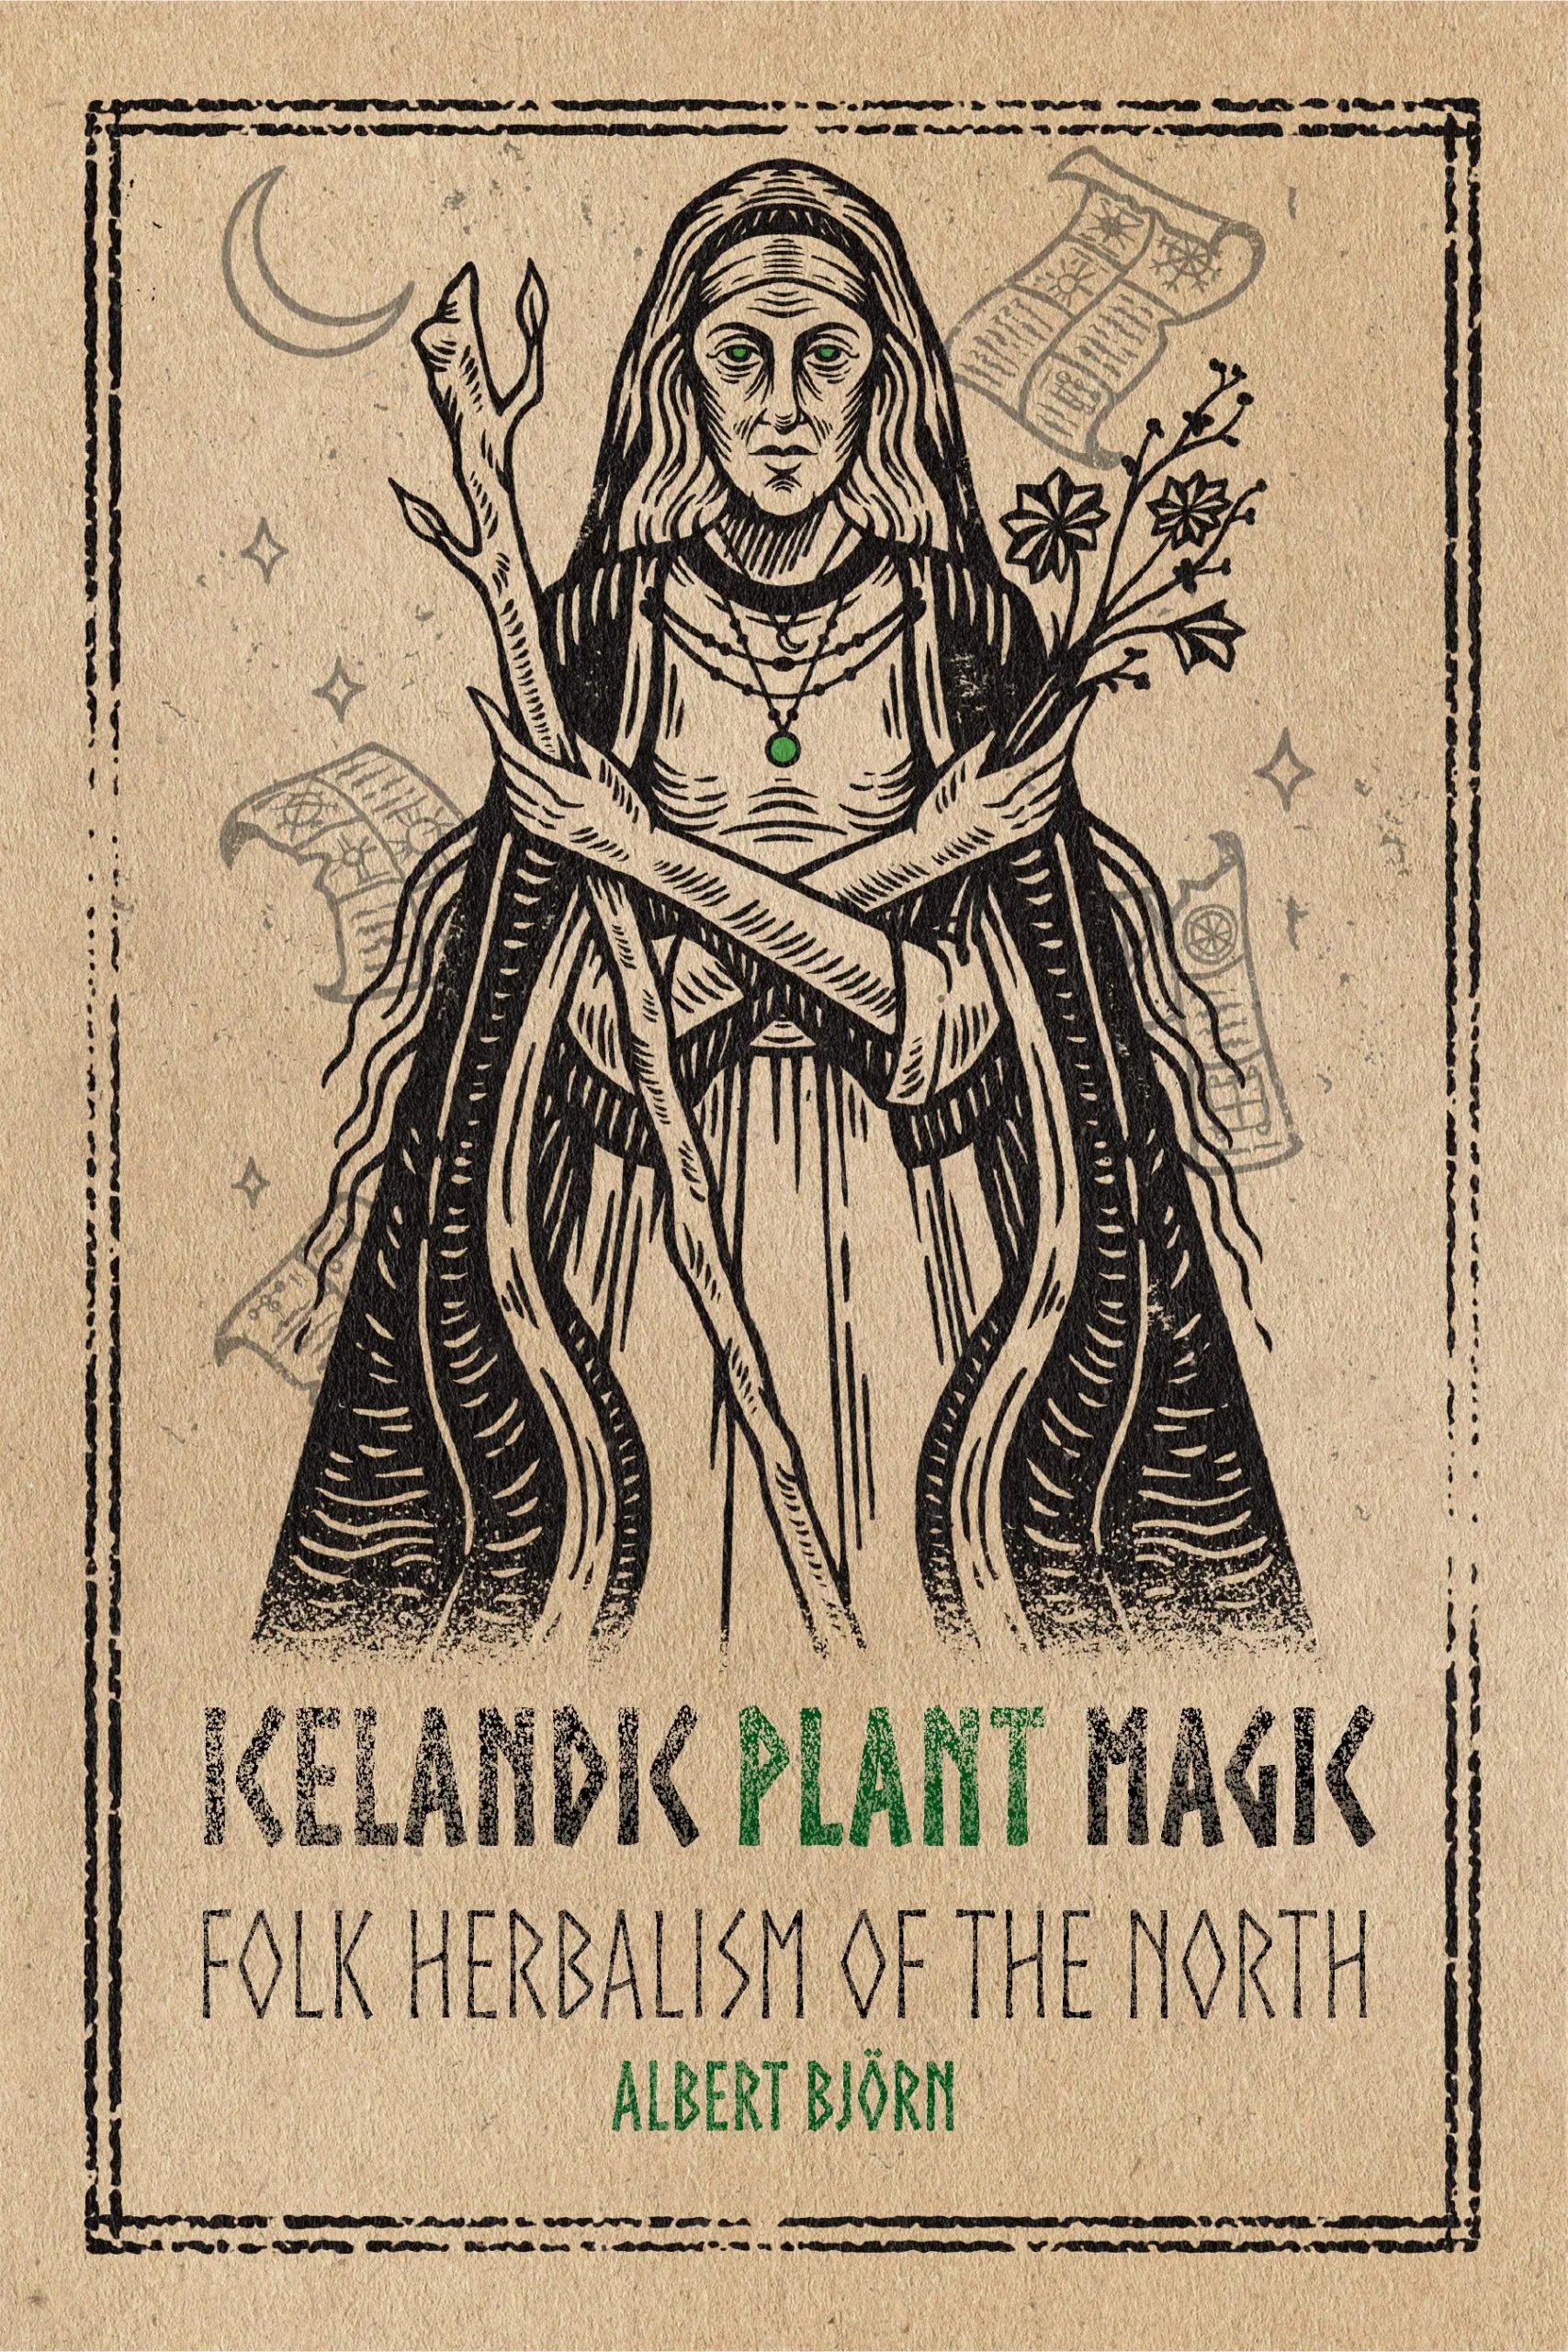 Icelandic Plant Magic : Folk Herbalism of the North